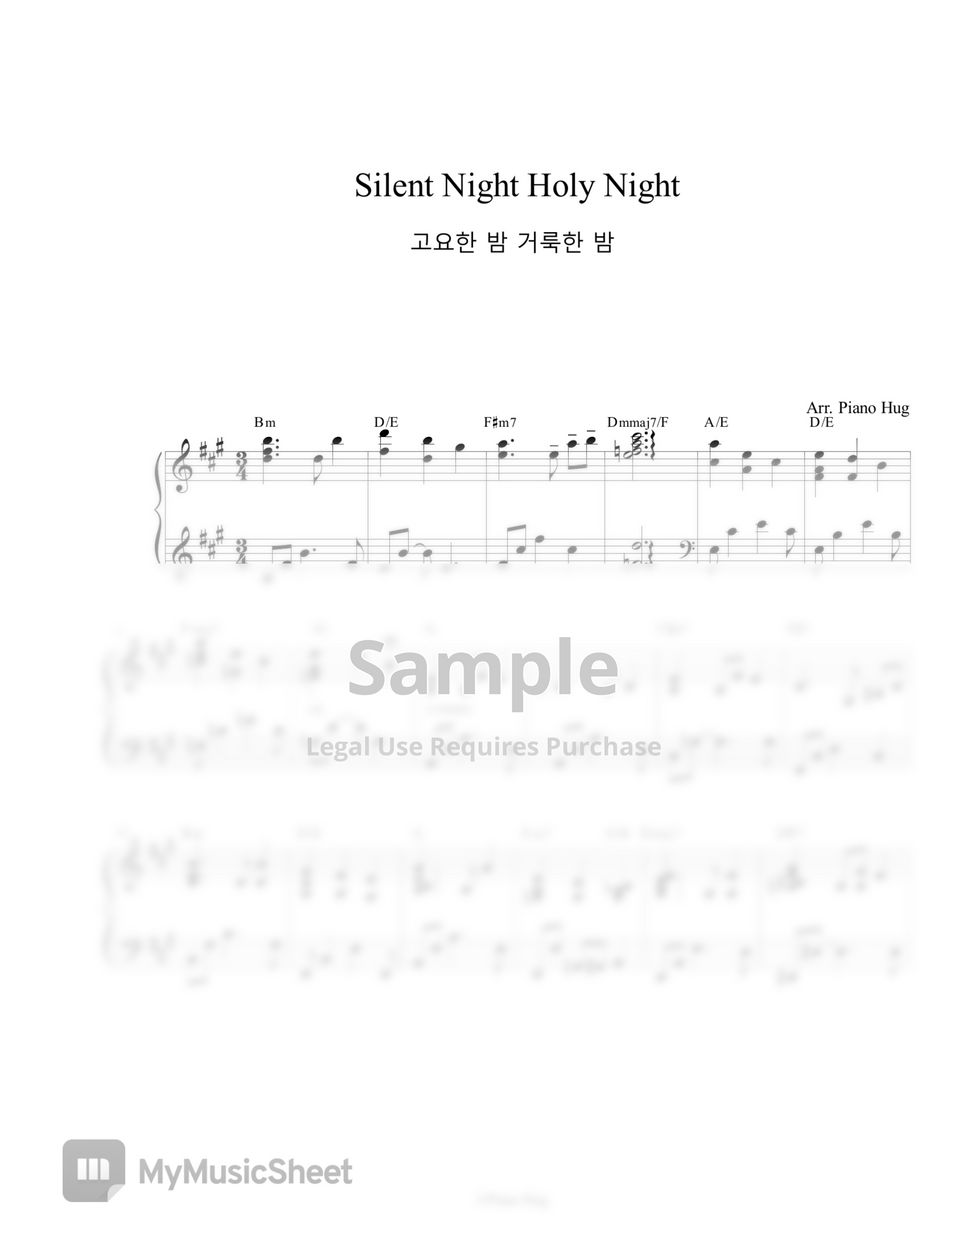 Christmas Carol - Silent Night Holy Night by Piano Hug